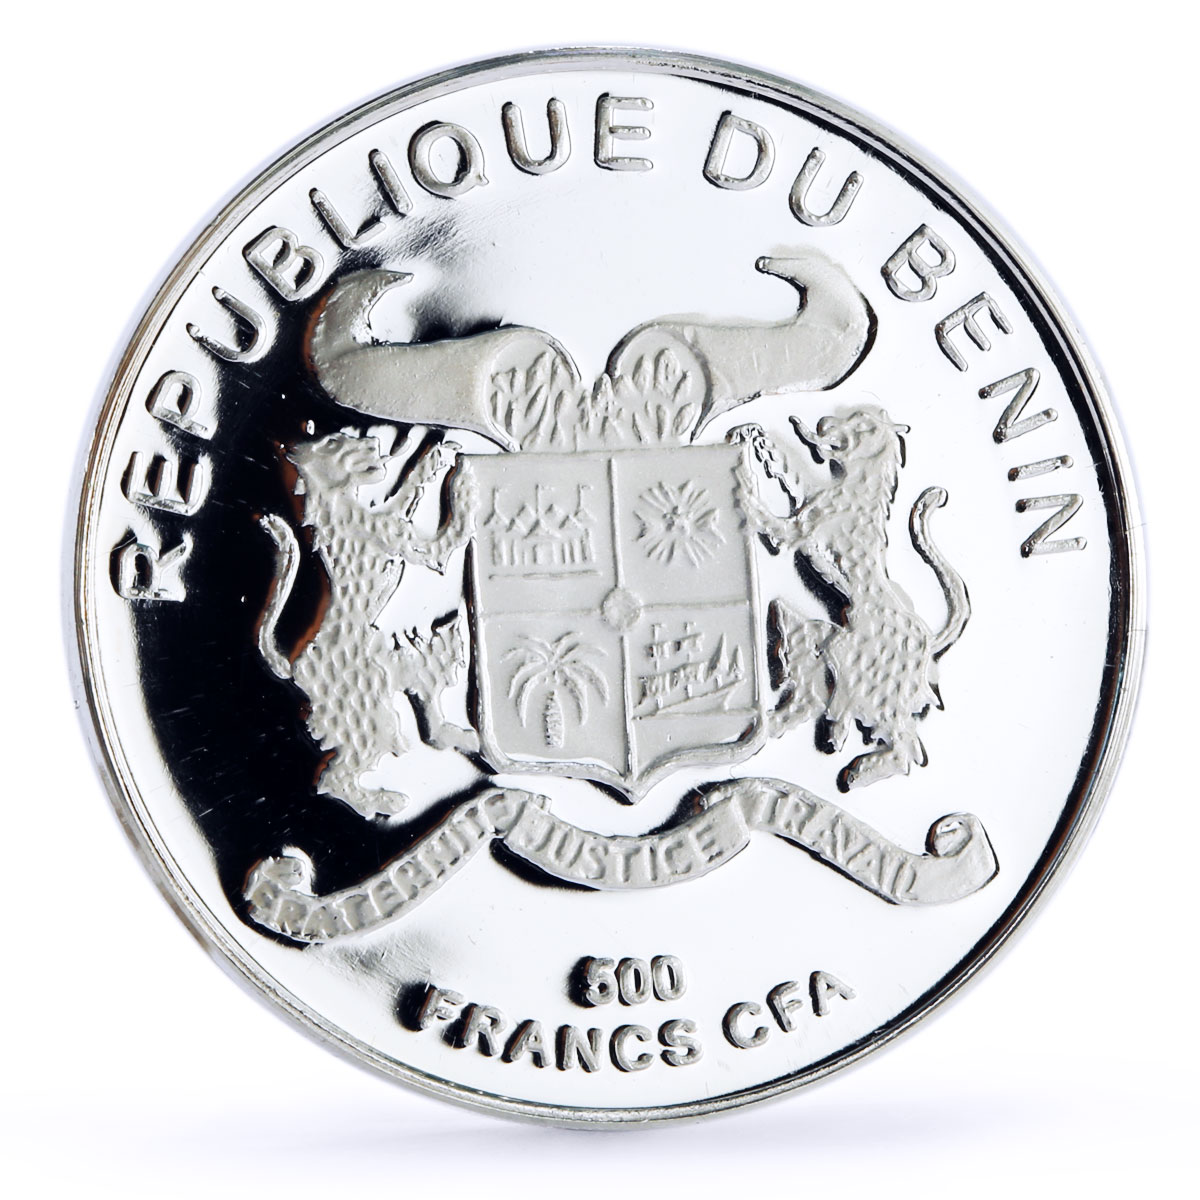 Benin 500 francs Seafaring Gorch Fock Ship Clipper proof silver coin 1996